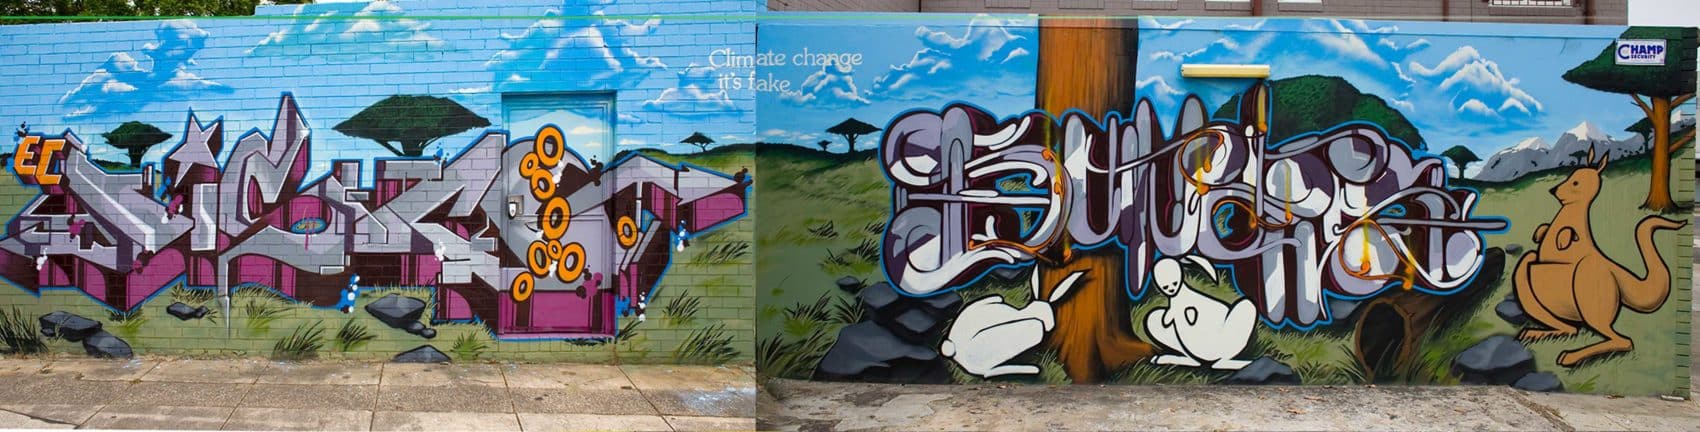 graffiti production sytak